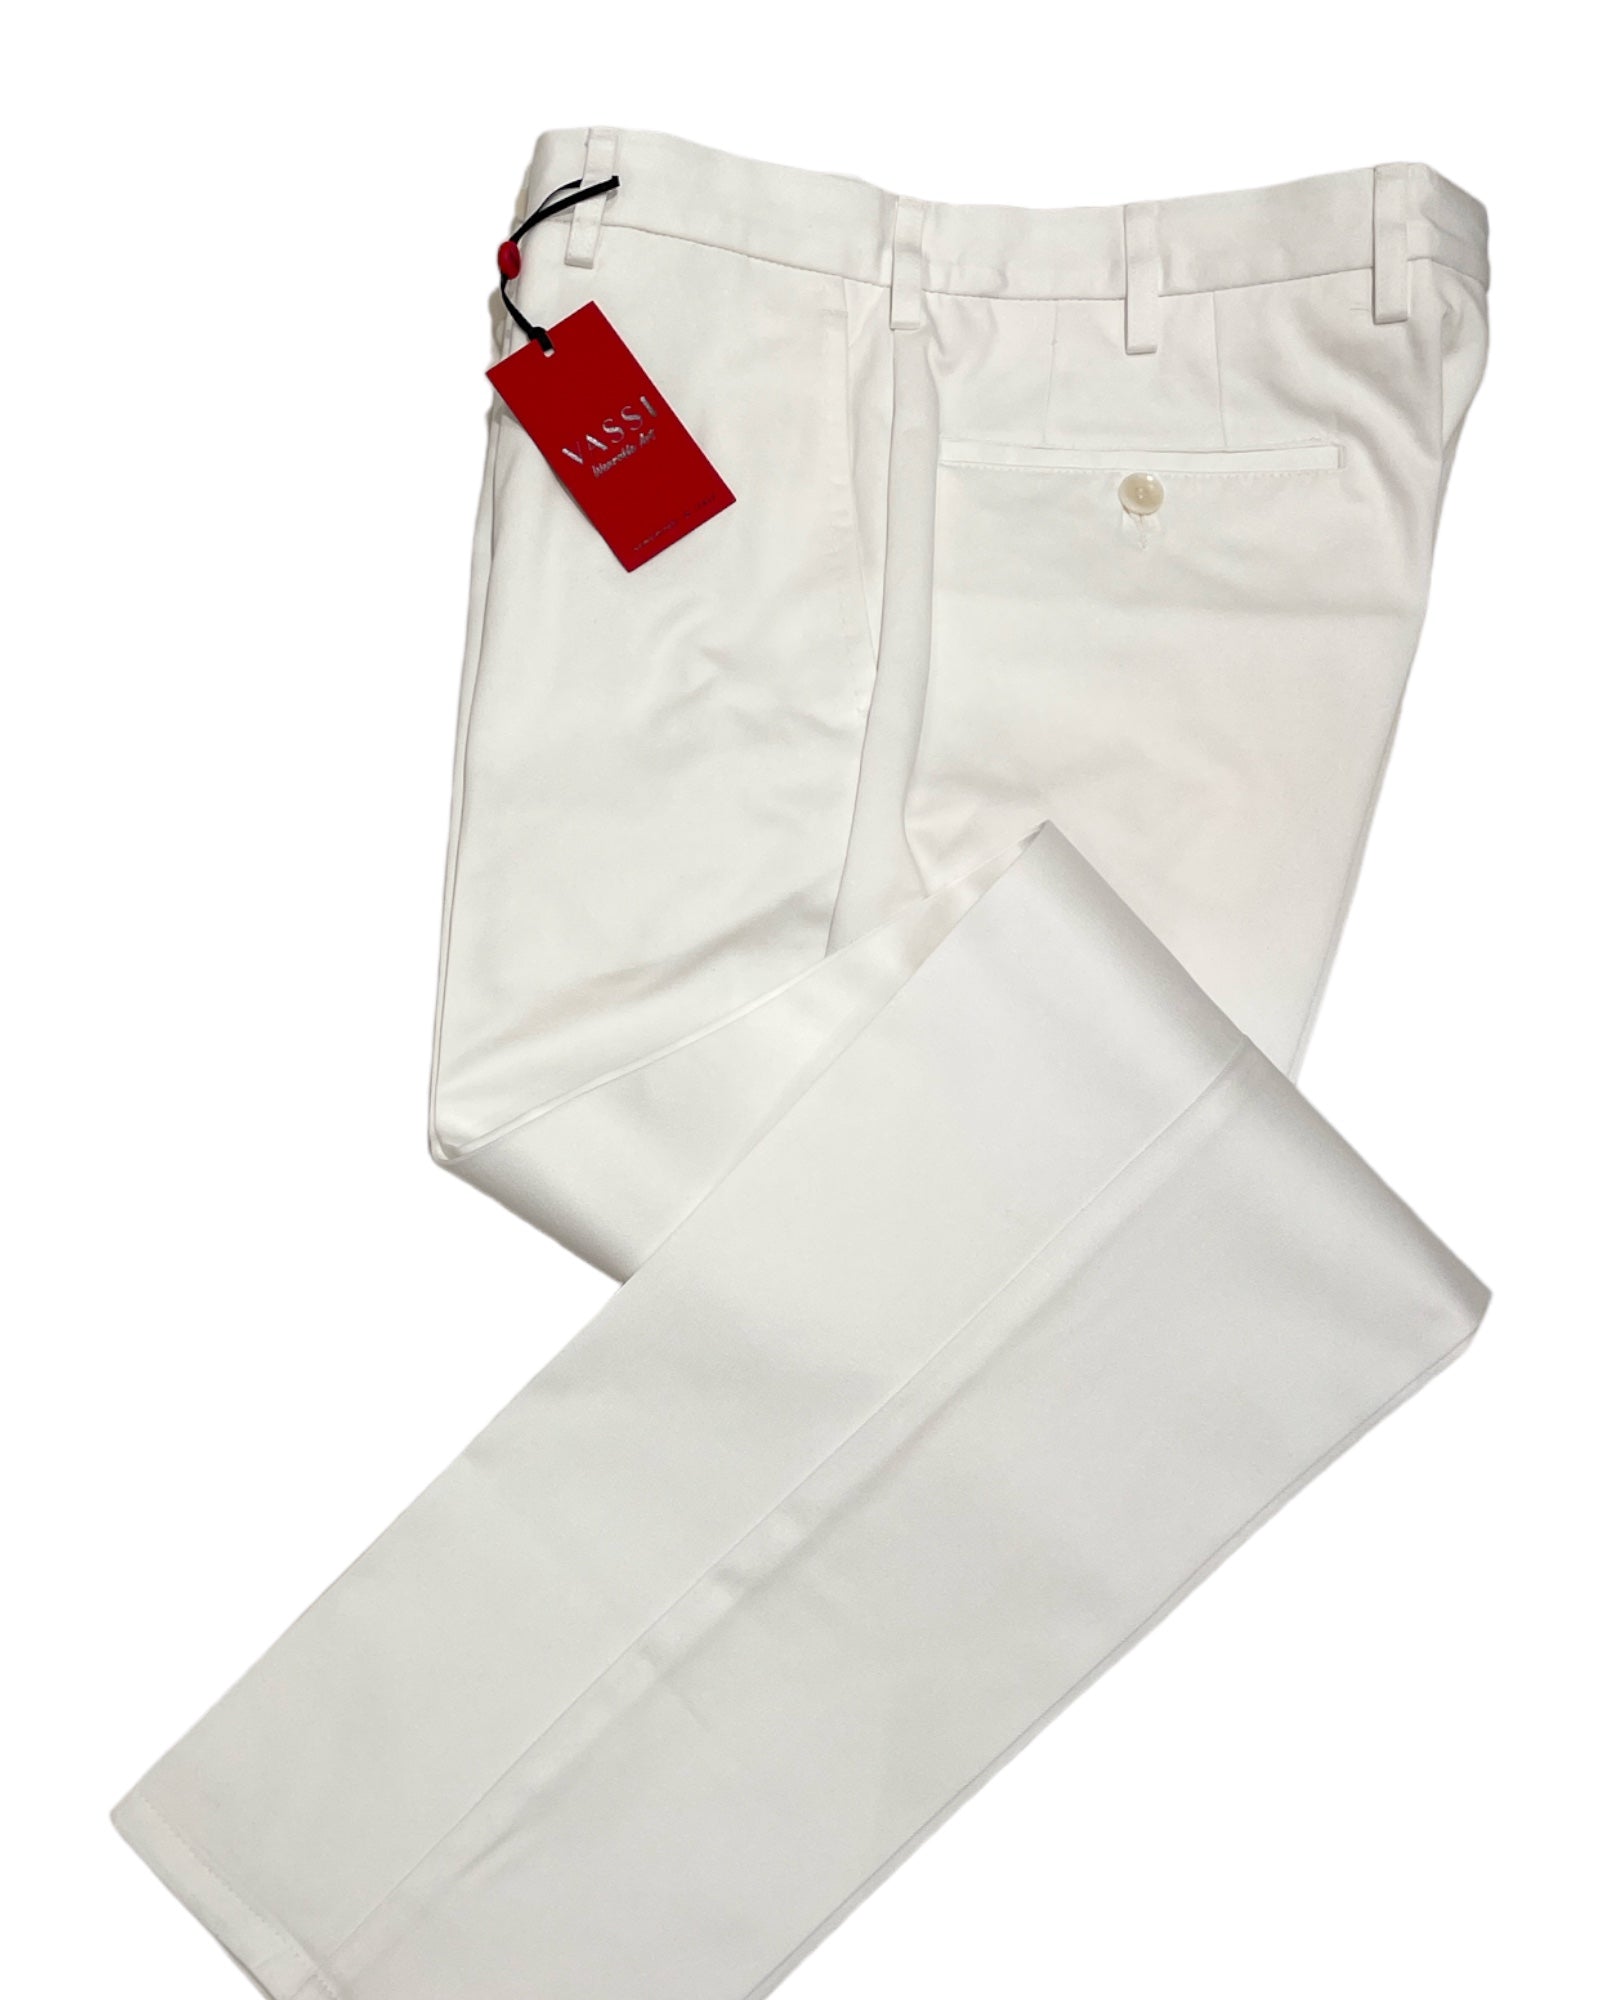 VASSI Flat Front Sartorial Cotton Trousers - White CASUAL PANTS48 EU